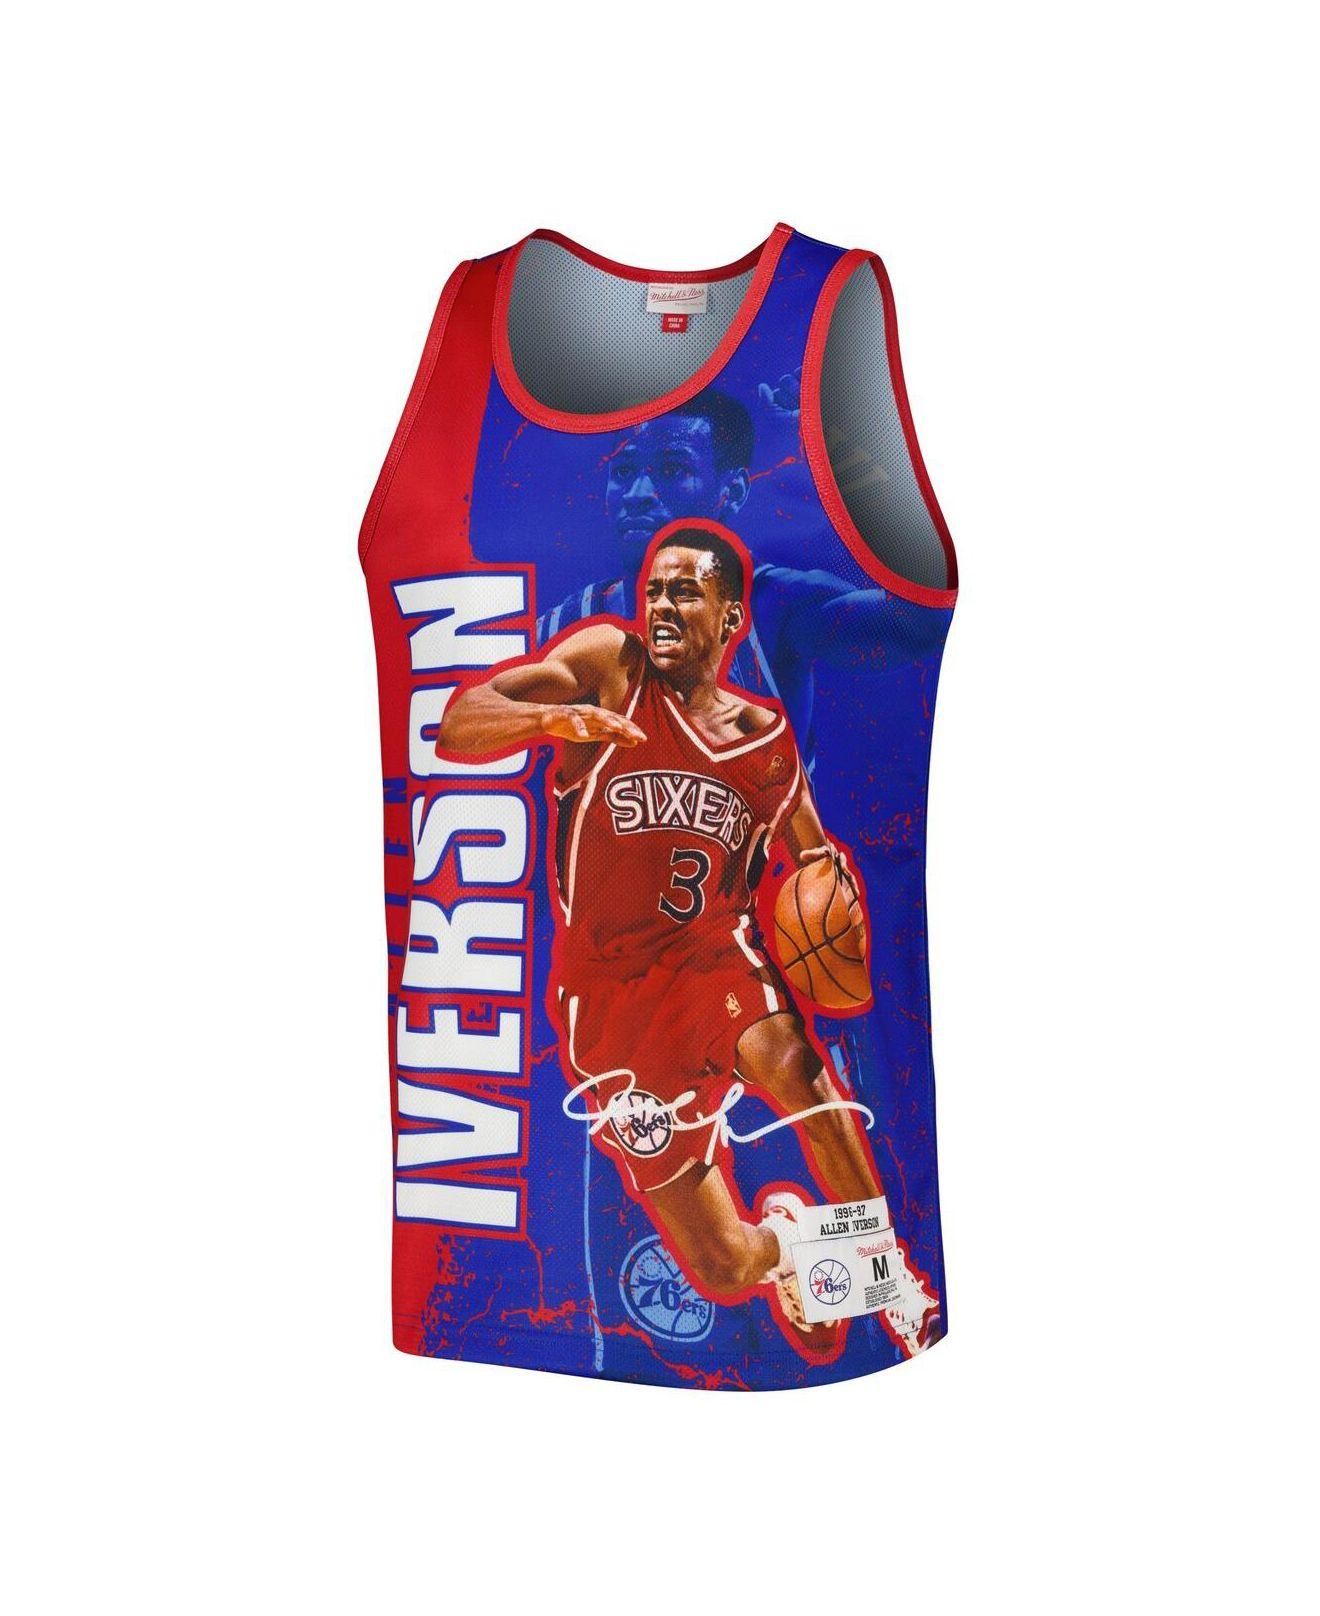 76ers retire Allen Iverson's jersey 